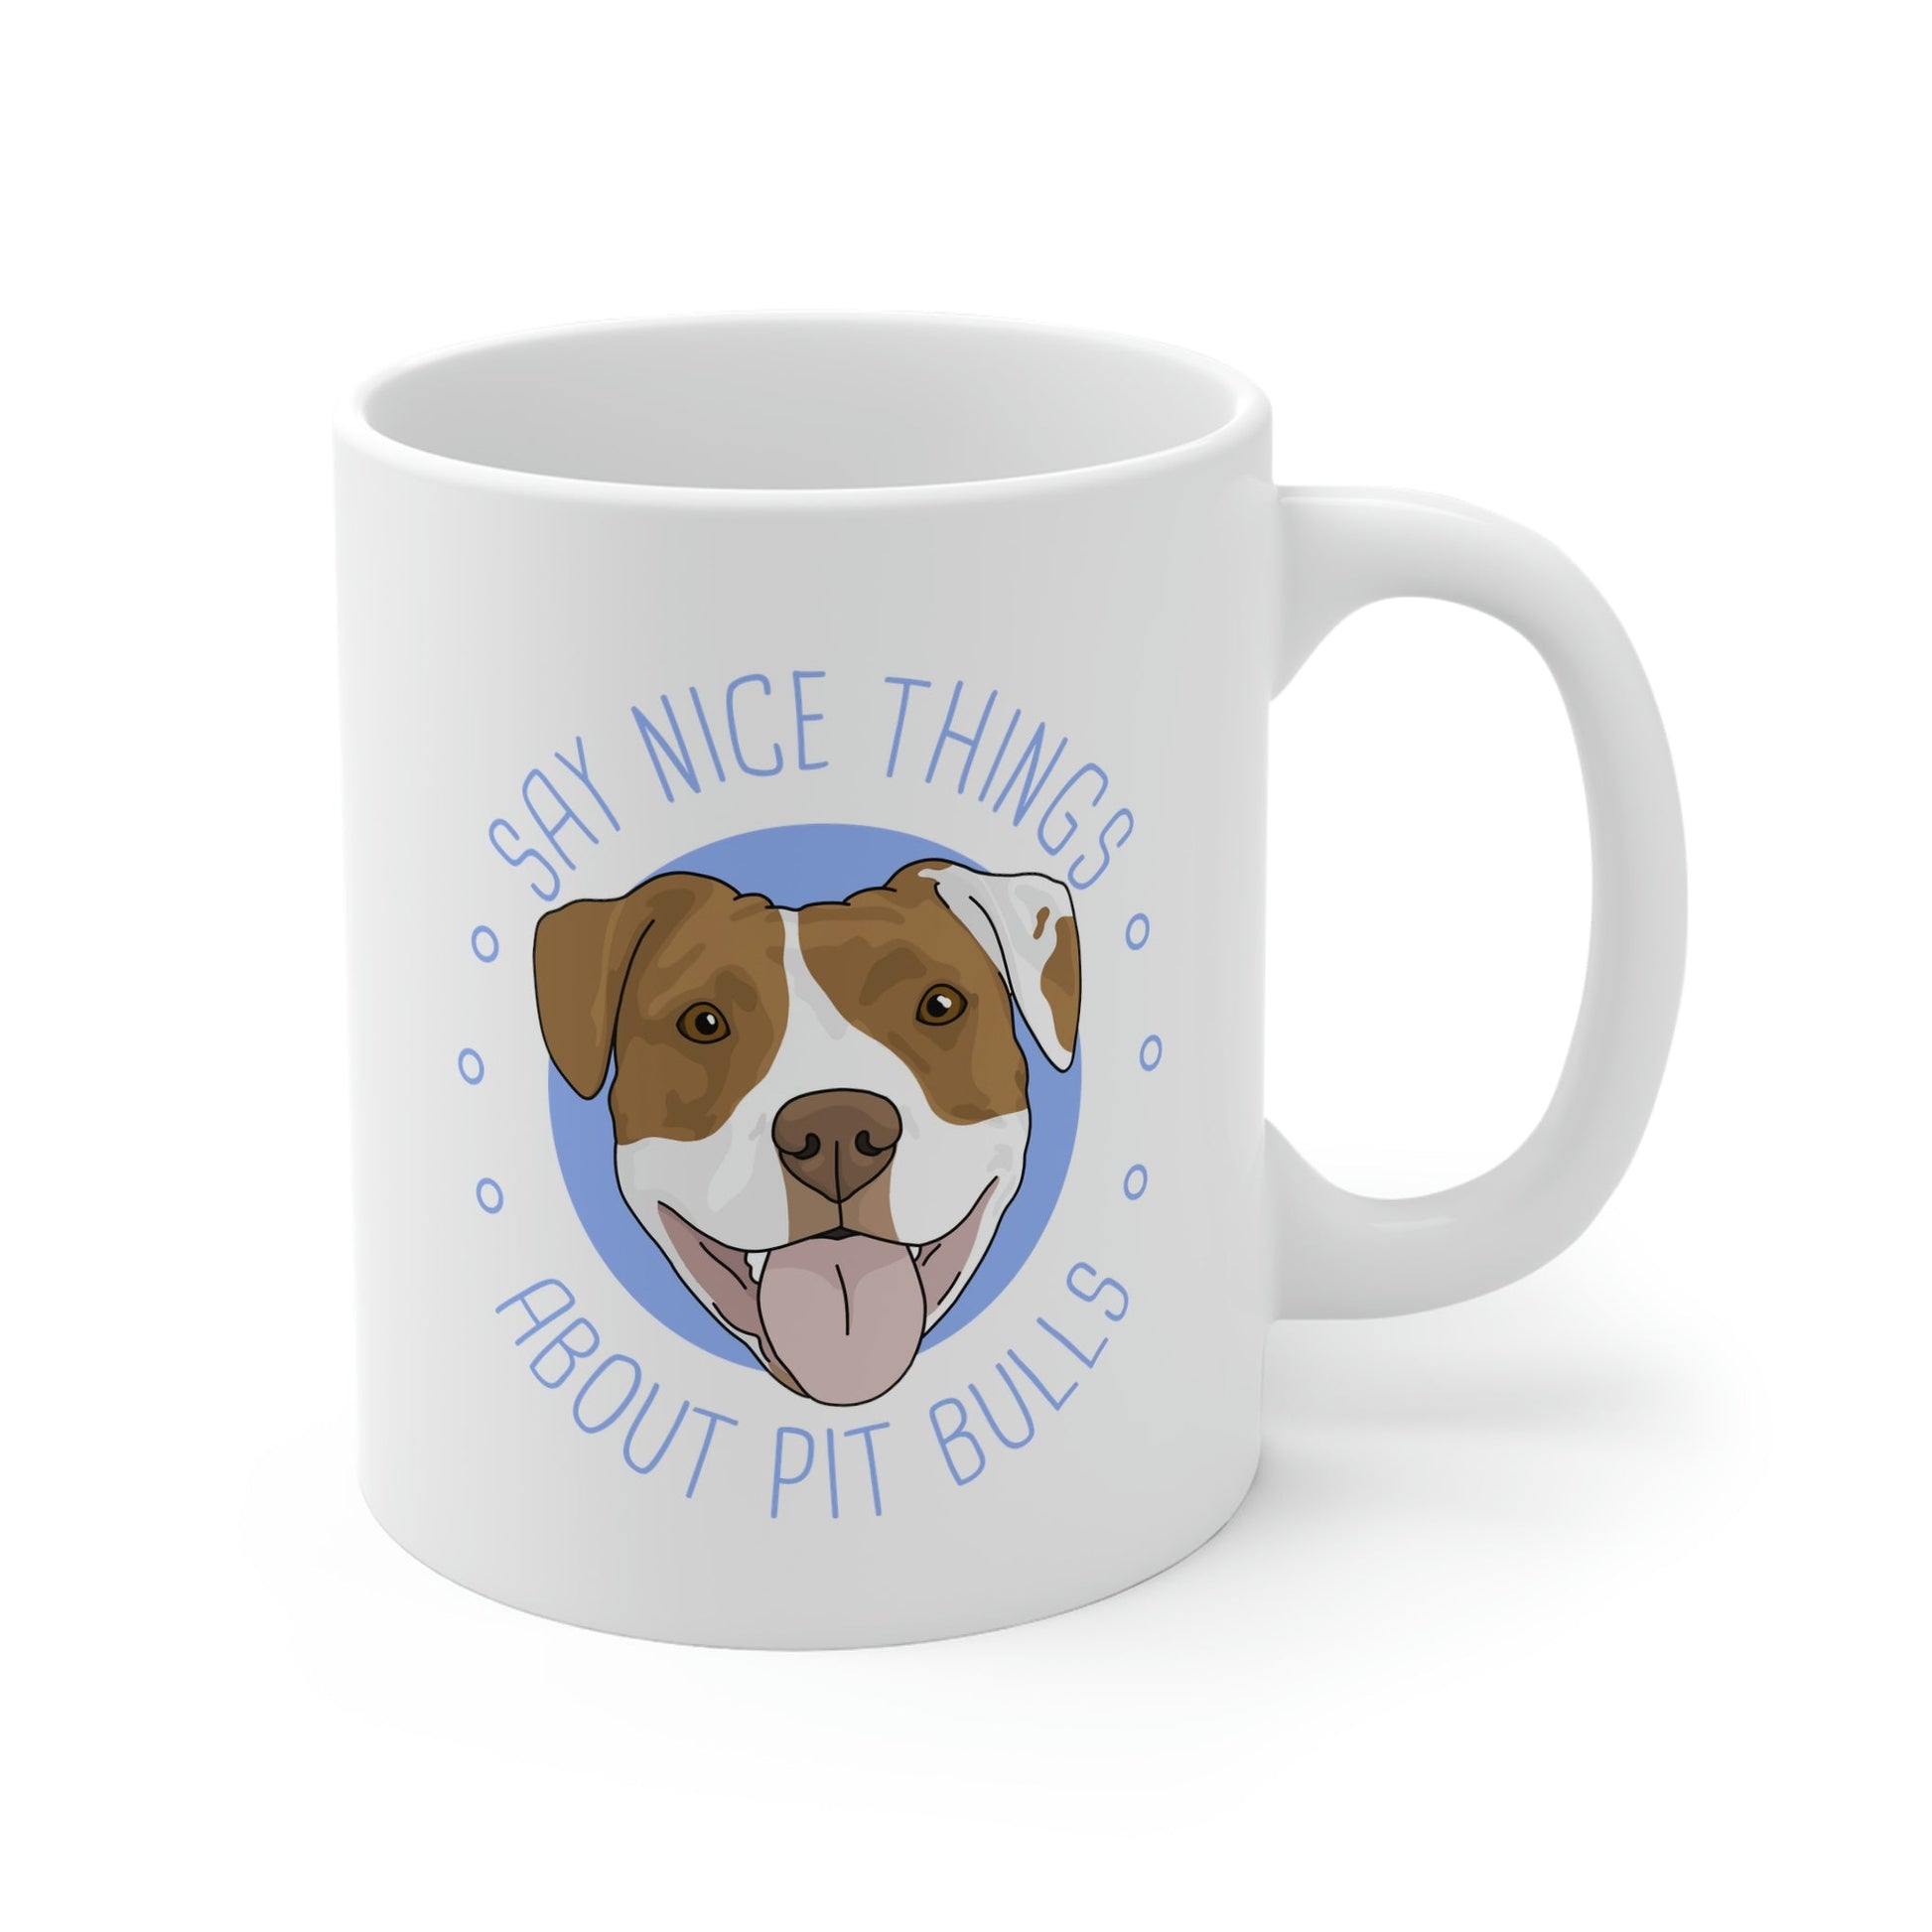 Say Nice Things About Pit Bulls | 11oz Mug - Detezi Designs-11162732310143810065